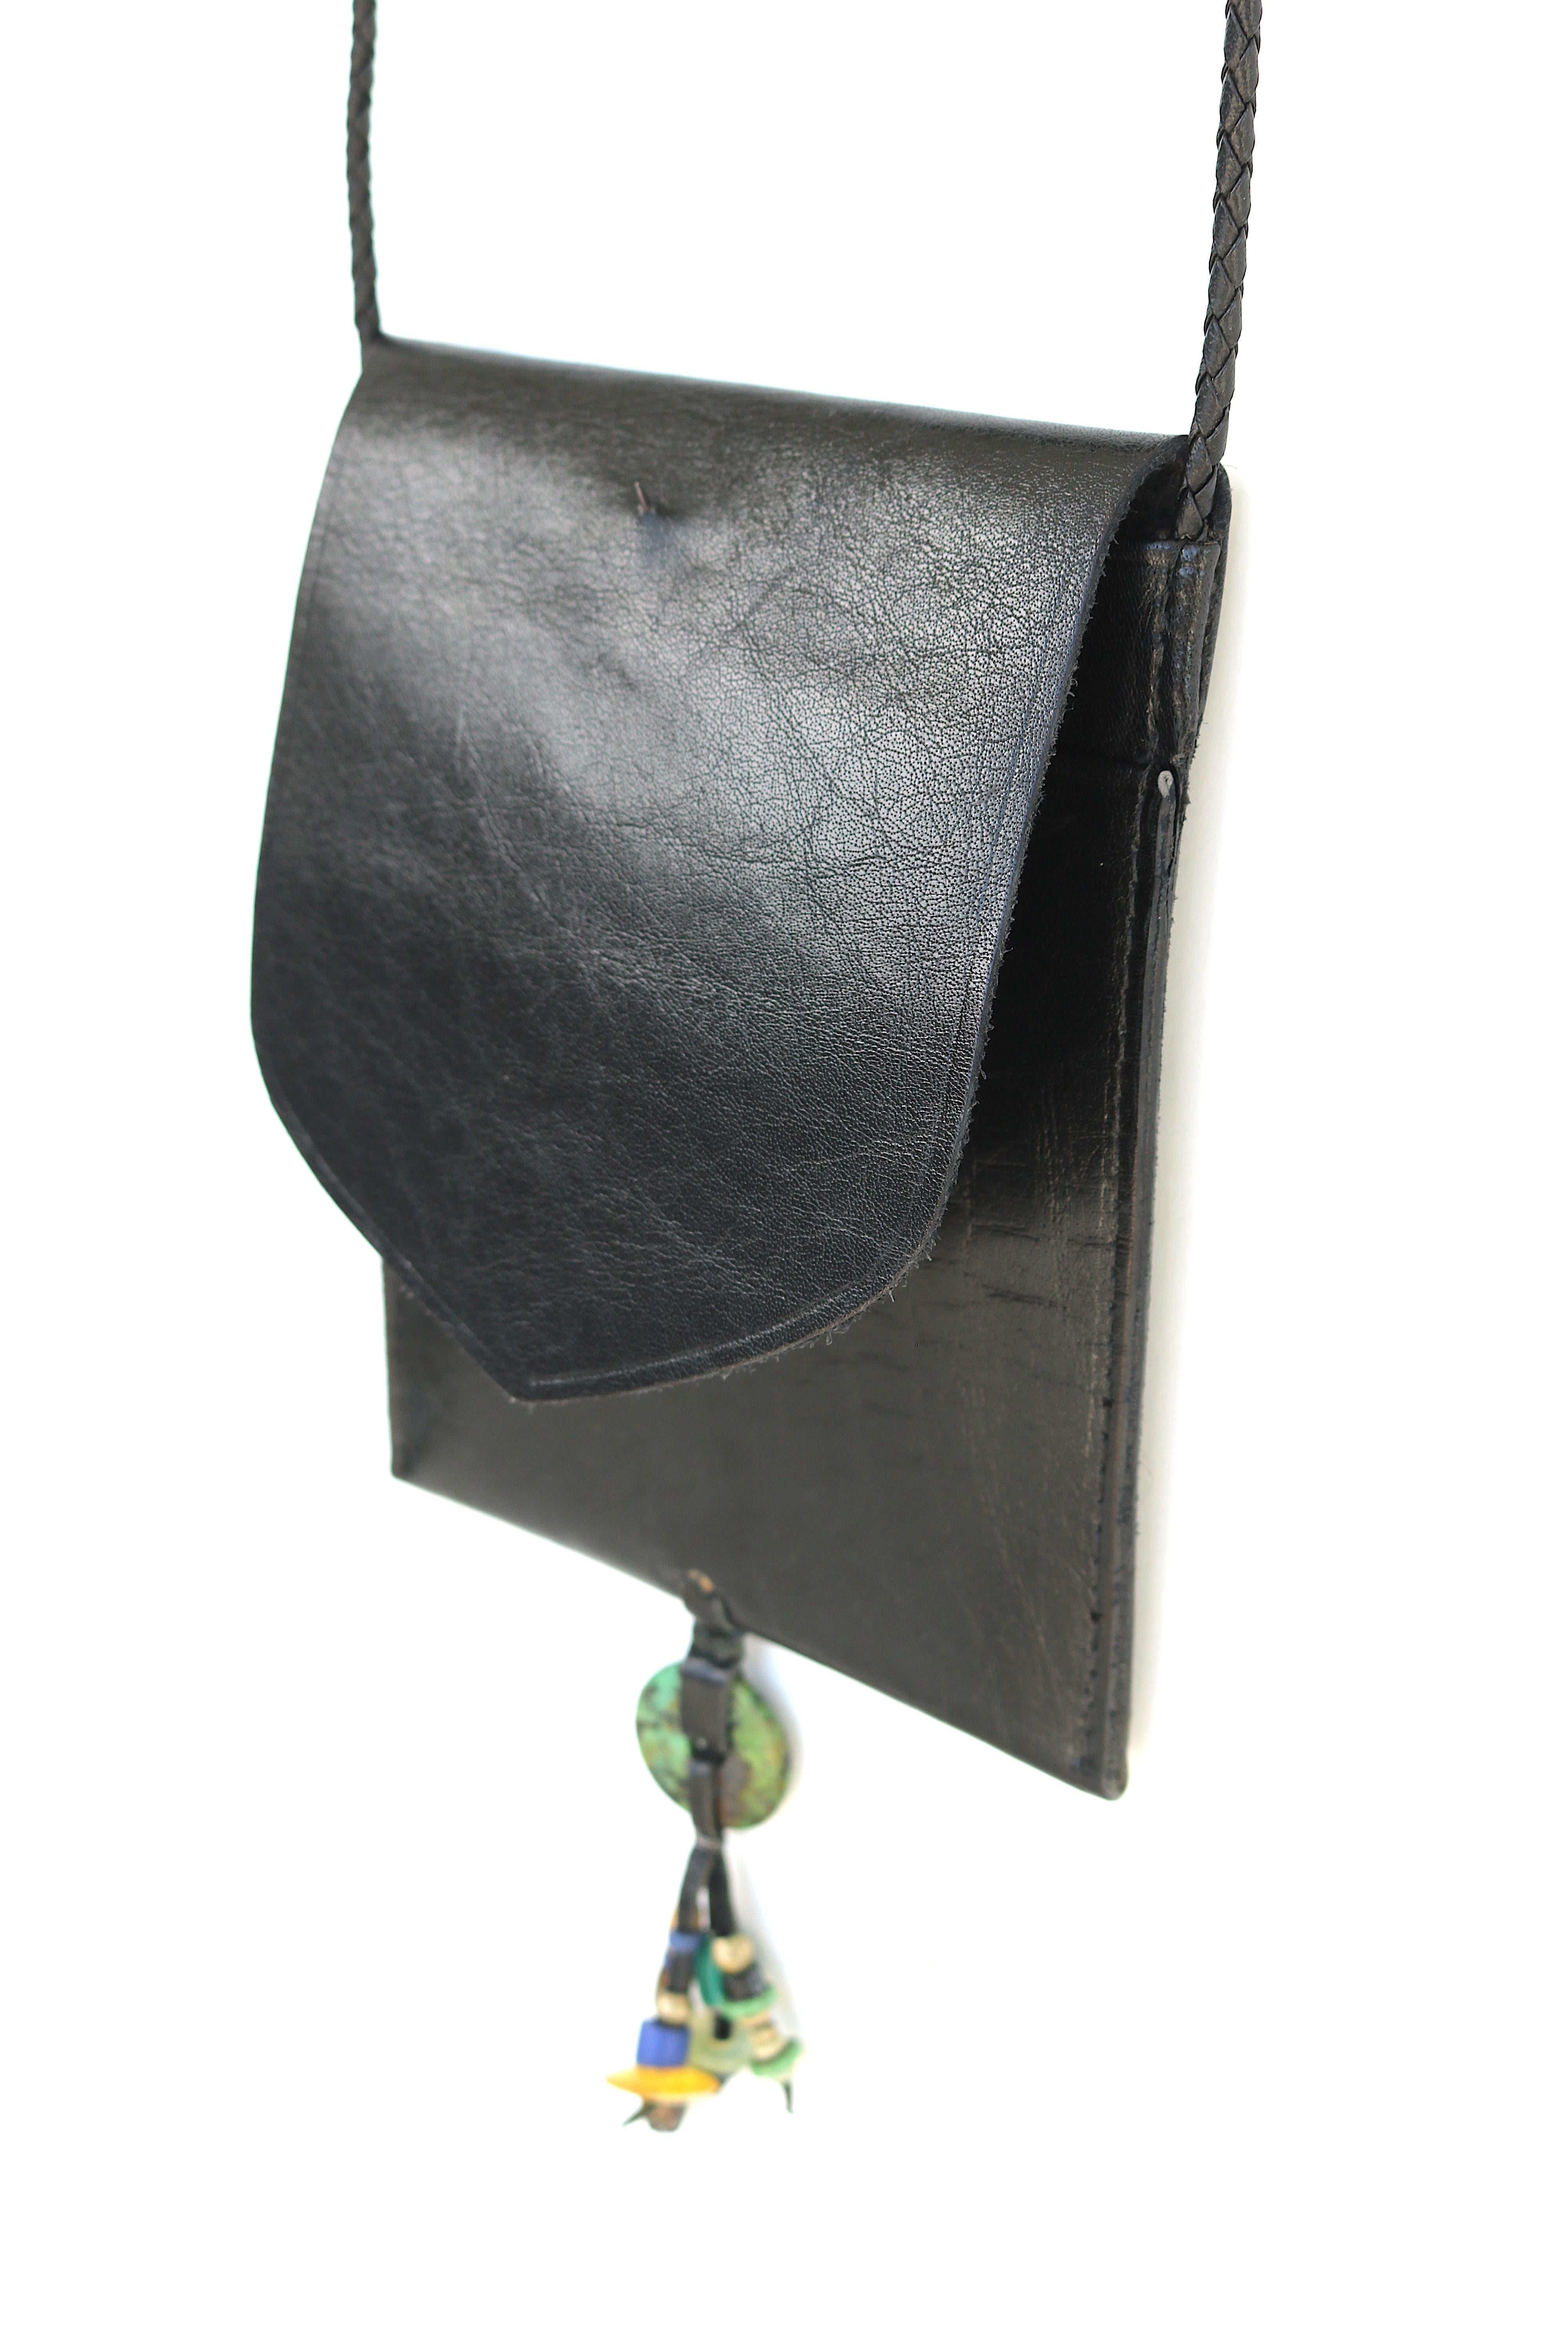 1970s Lizard Gem Tassels Crossbody Bag-Lightweight for Phone, Passport, Everyday For Sale 2